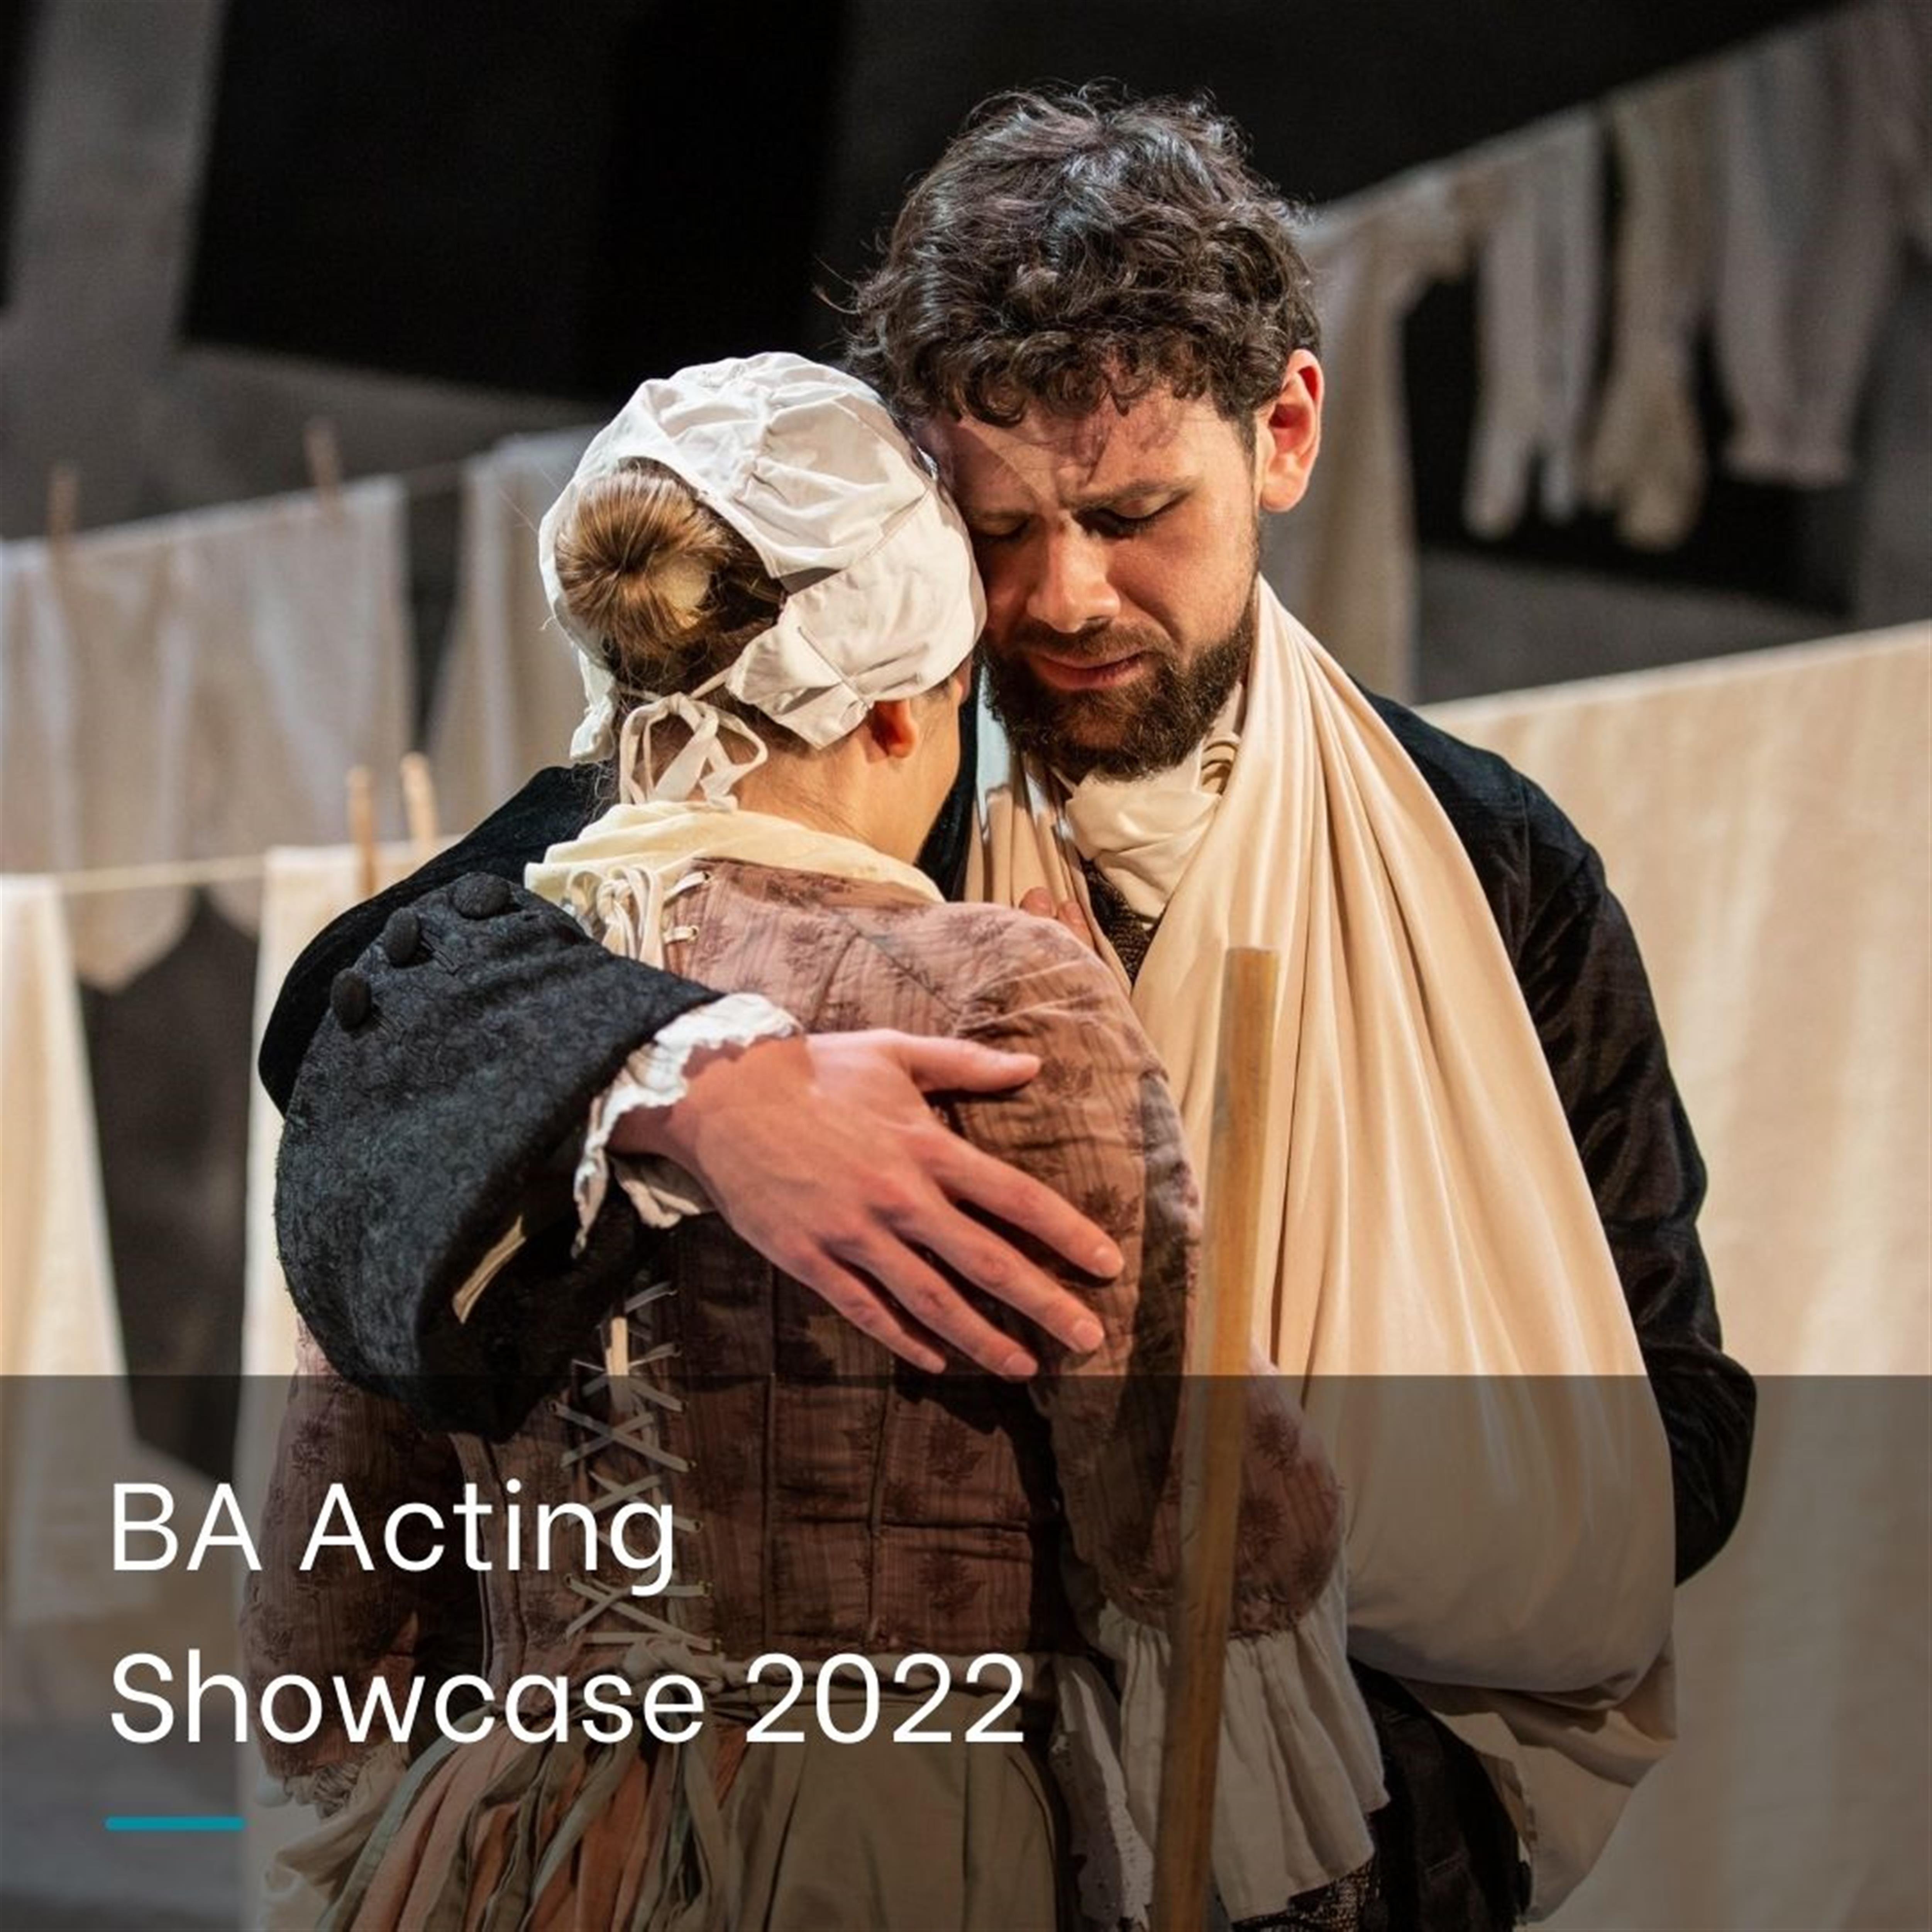 BA Acting Digital Showcase 2022